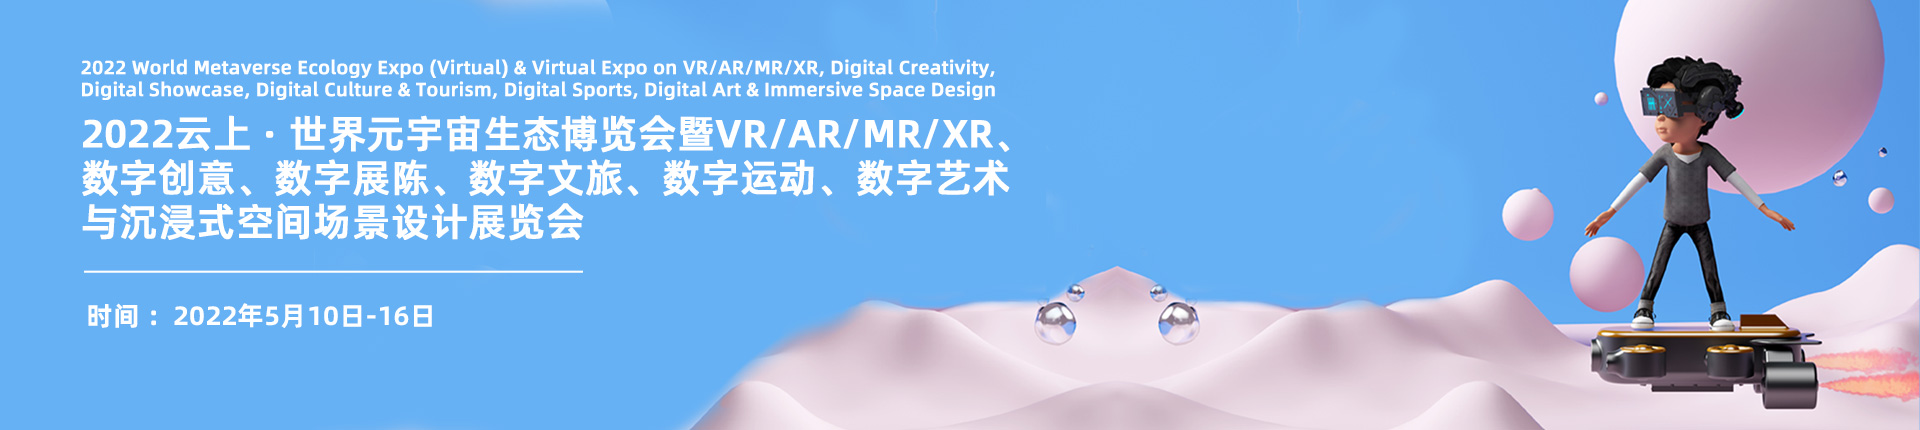 2022 World Metaverse Ecology Expo (Virtual) & VR/AR/MR/XR, Digital Creativity, Digital Exhibition......